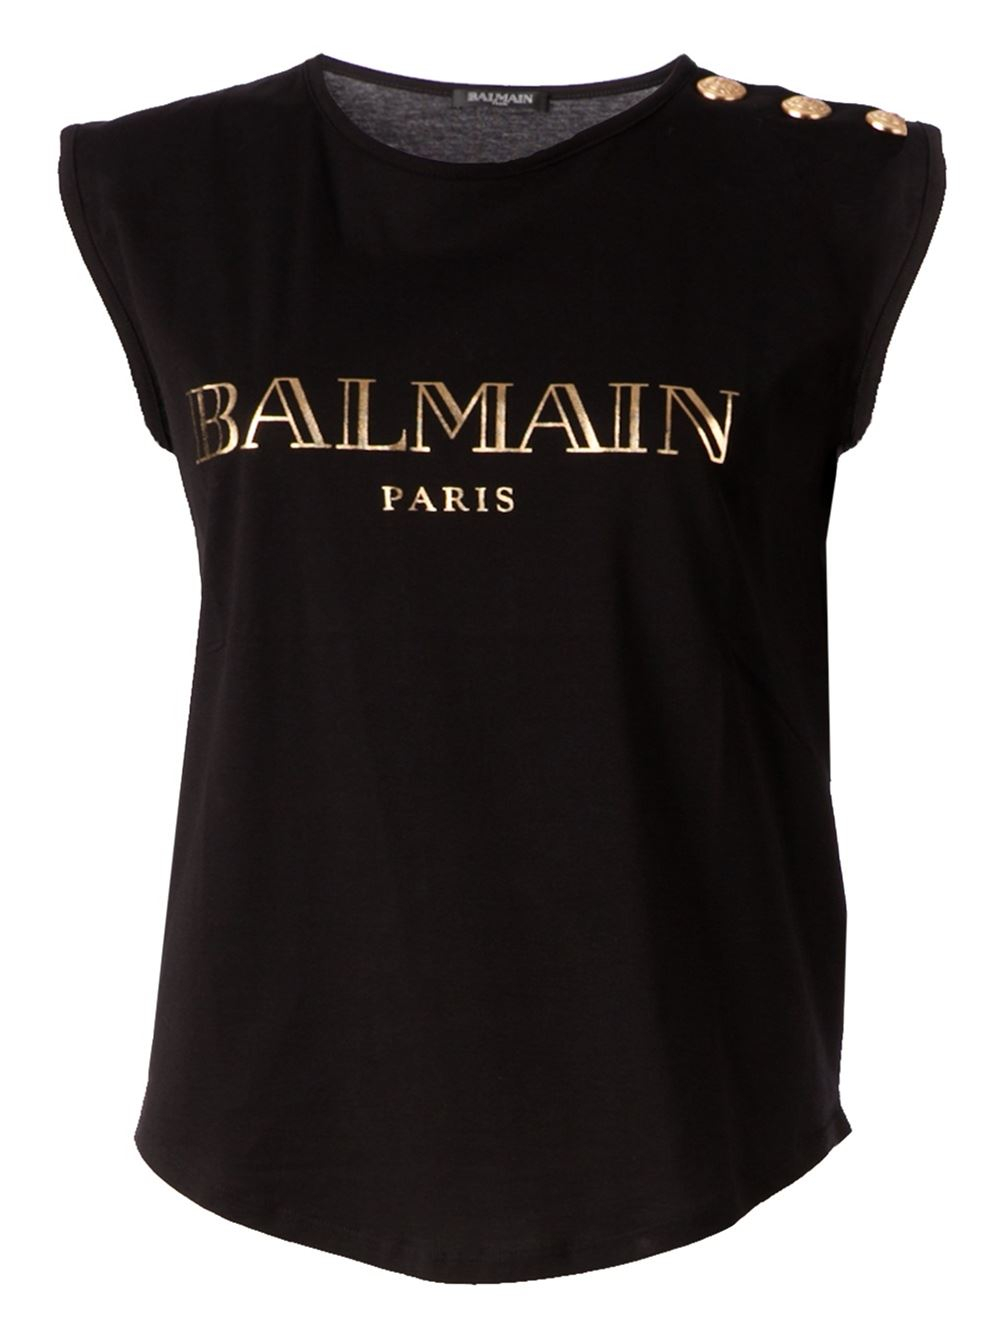 Balmain Logo T-Shirt in Black - Lyst